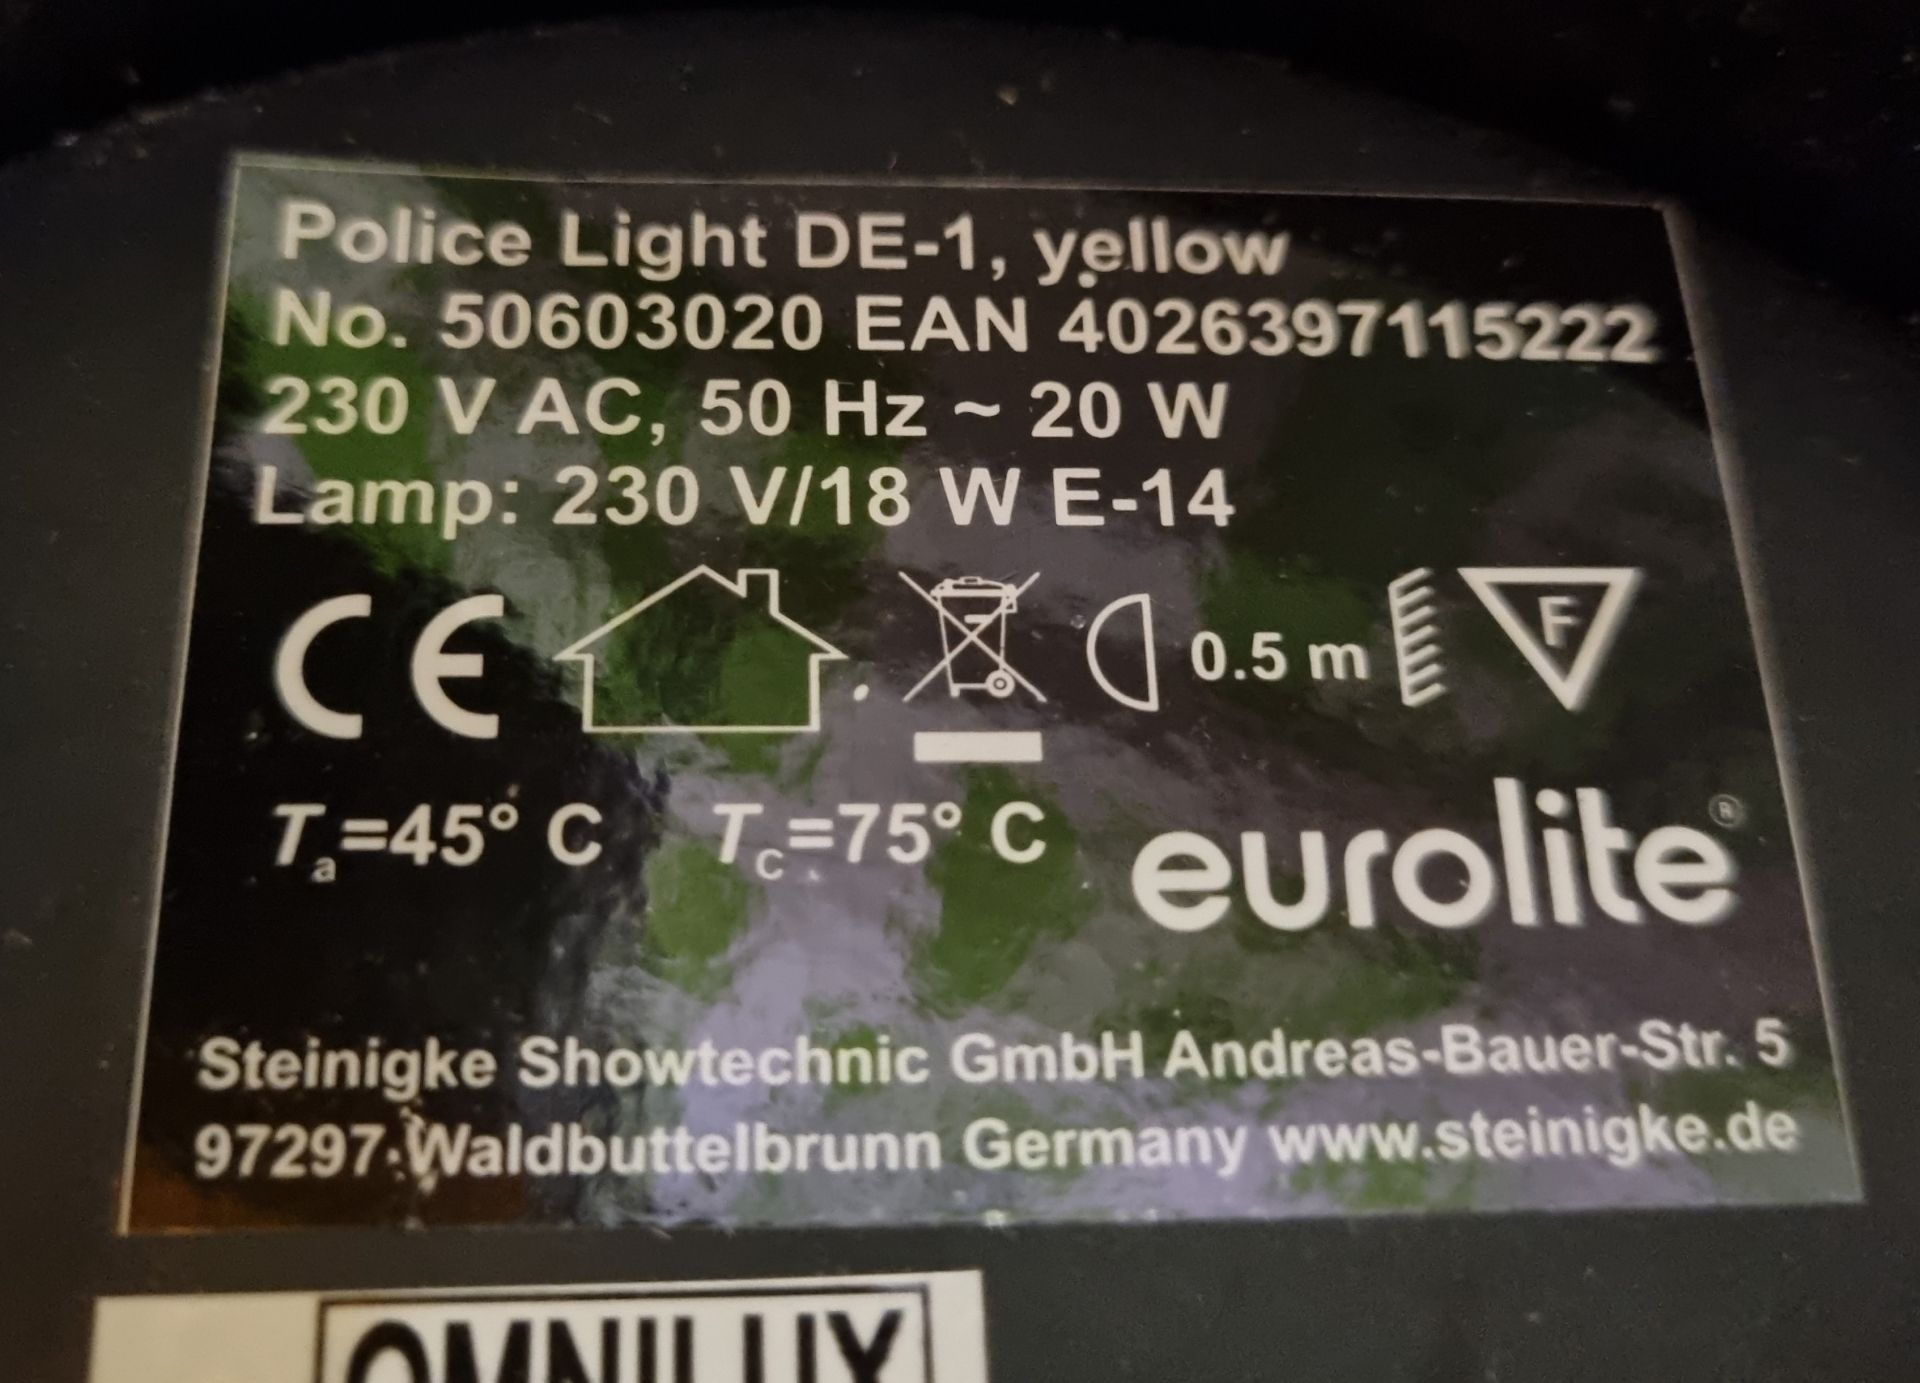 4x Eurolite amber rotating beacons - 230V with 16A plugs - Image 4 of 4